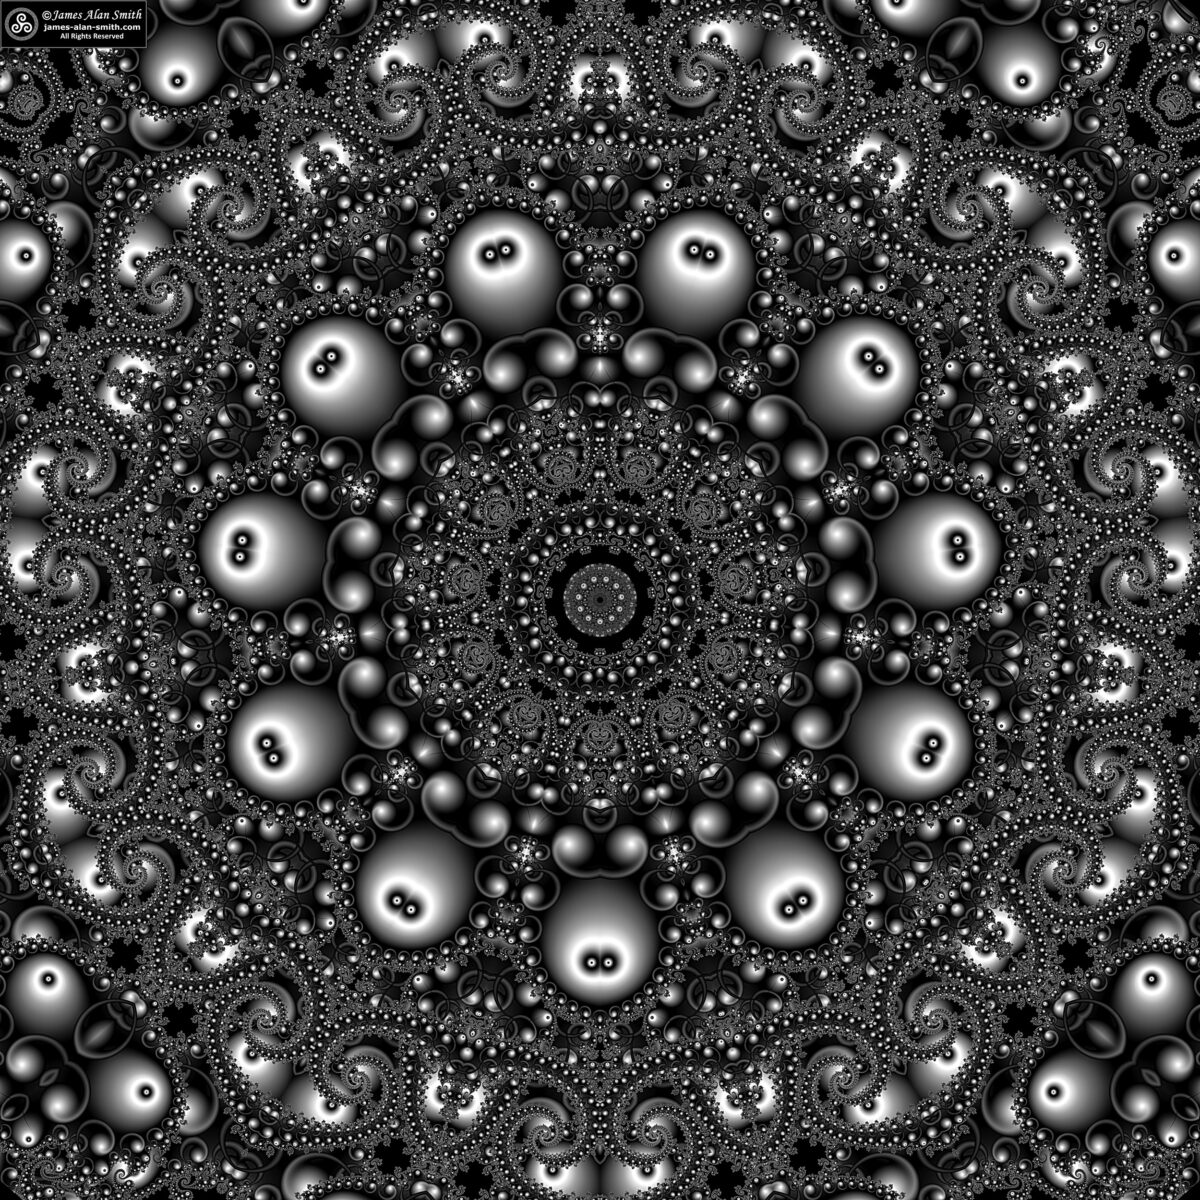 Unusual Mandala Series #01052021: Artwork by James Alan Smith